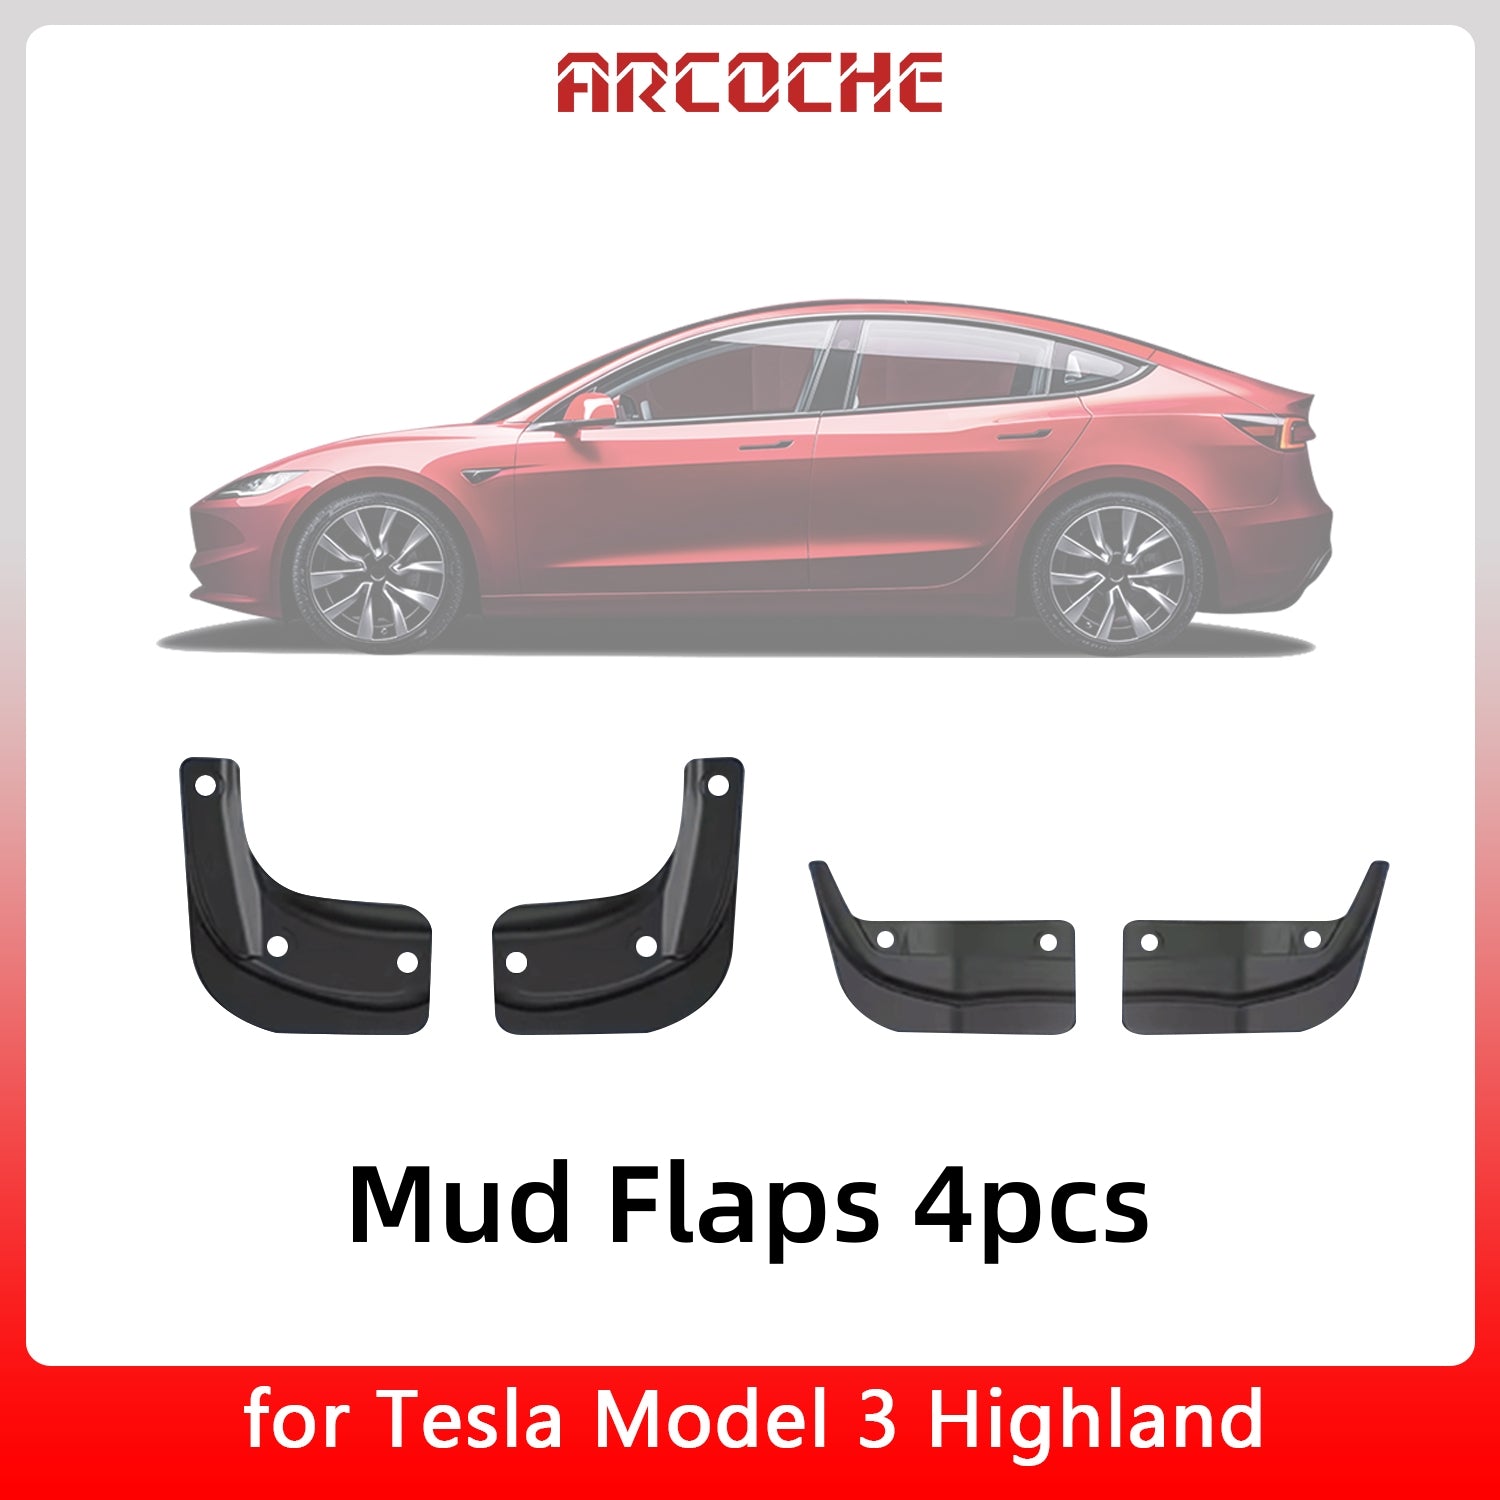 Accessories for Tesla Model 3